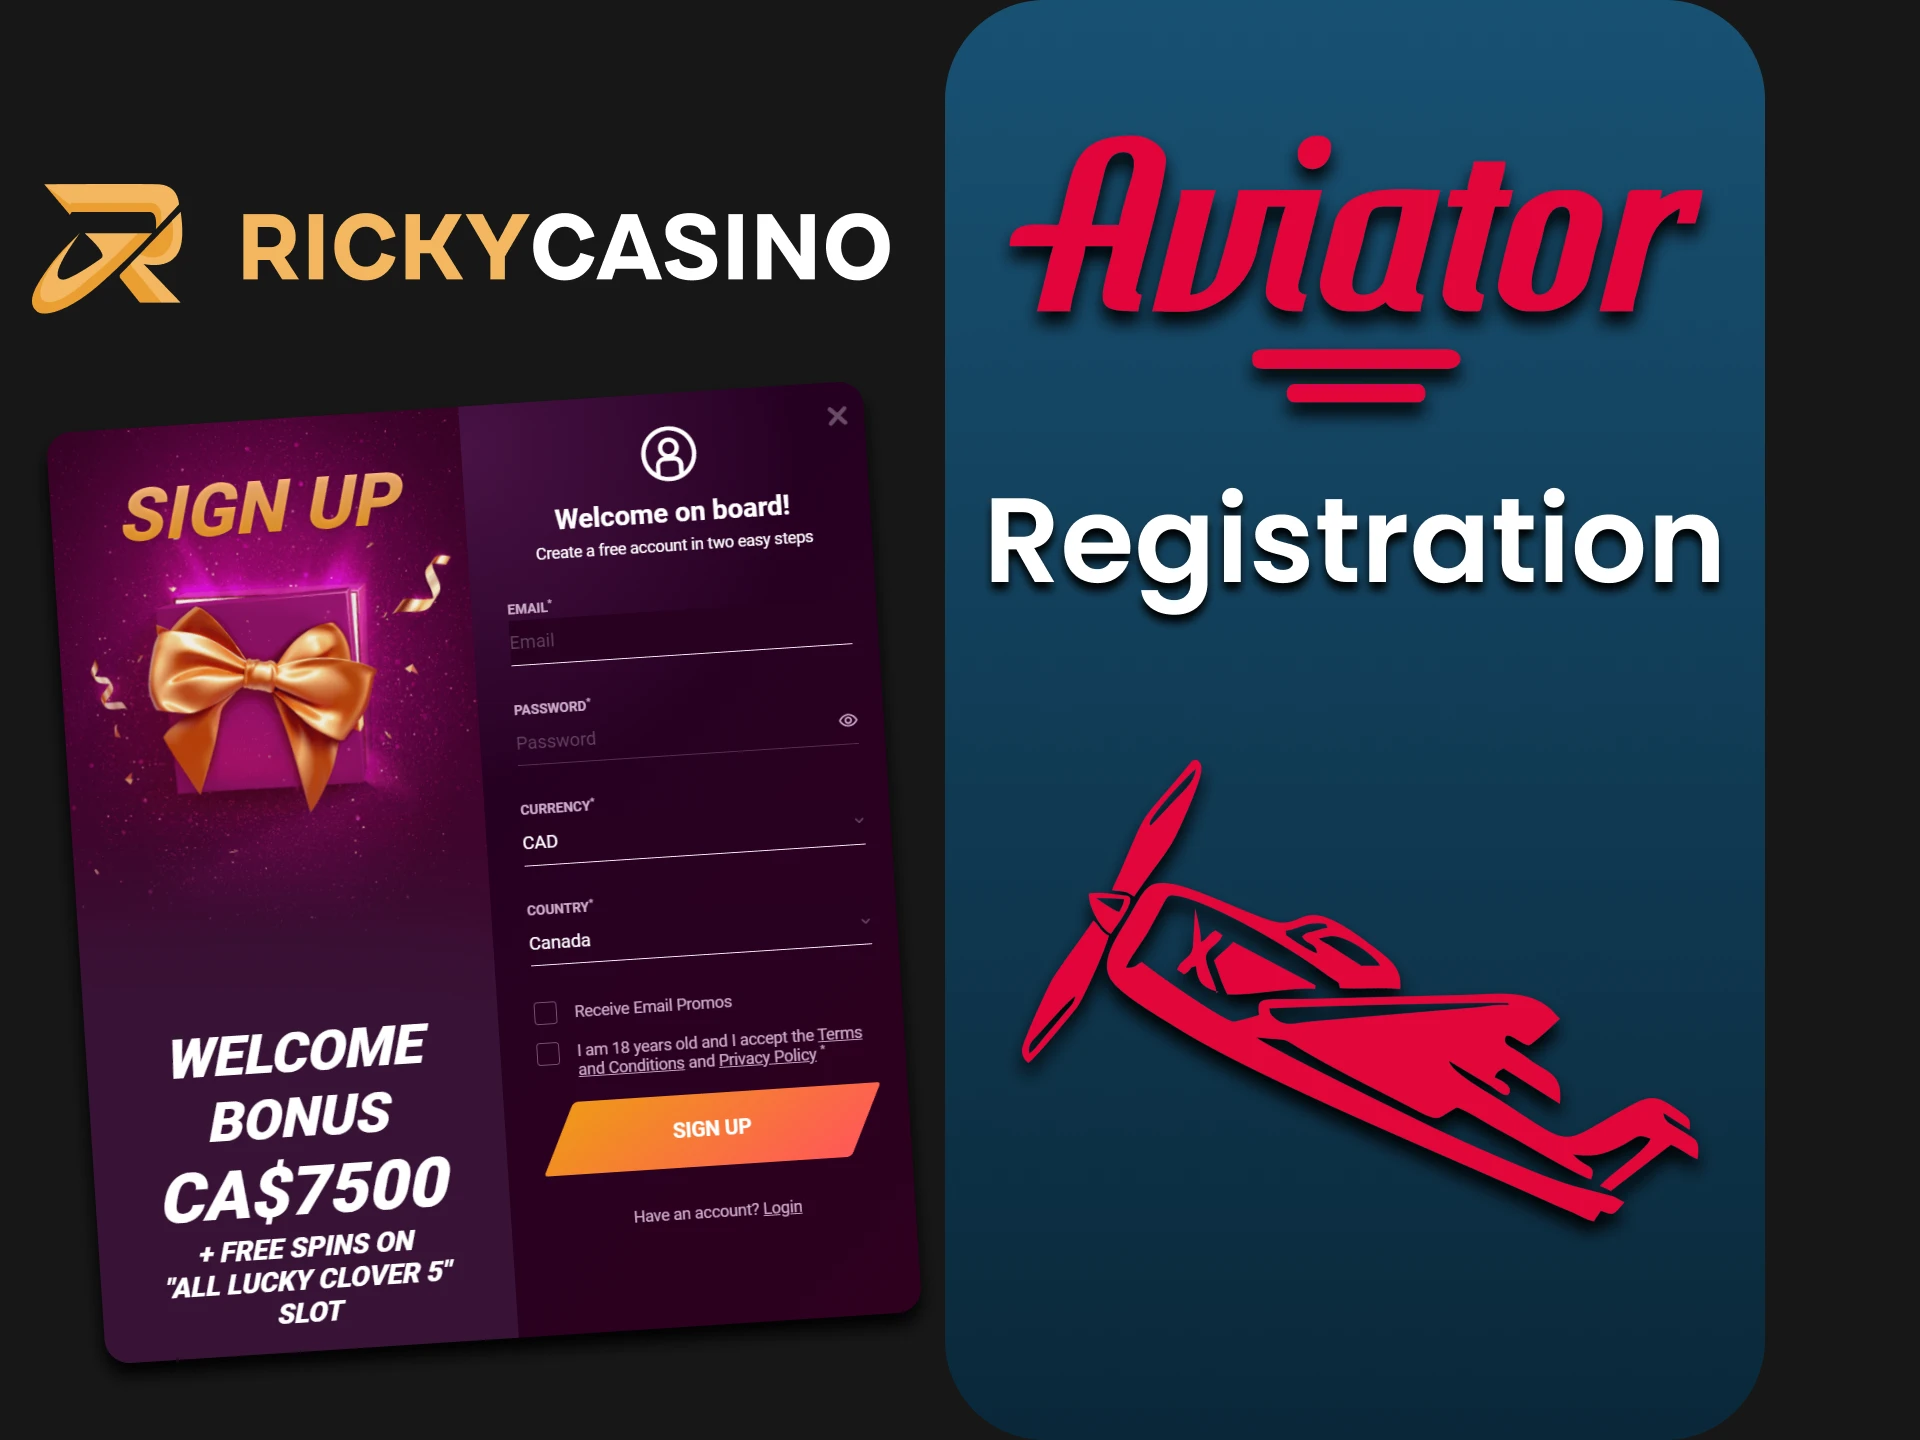 Register at Ricky Casino to play Aviator.